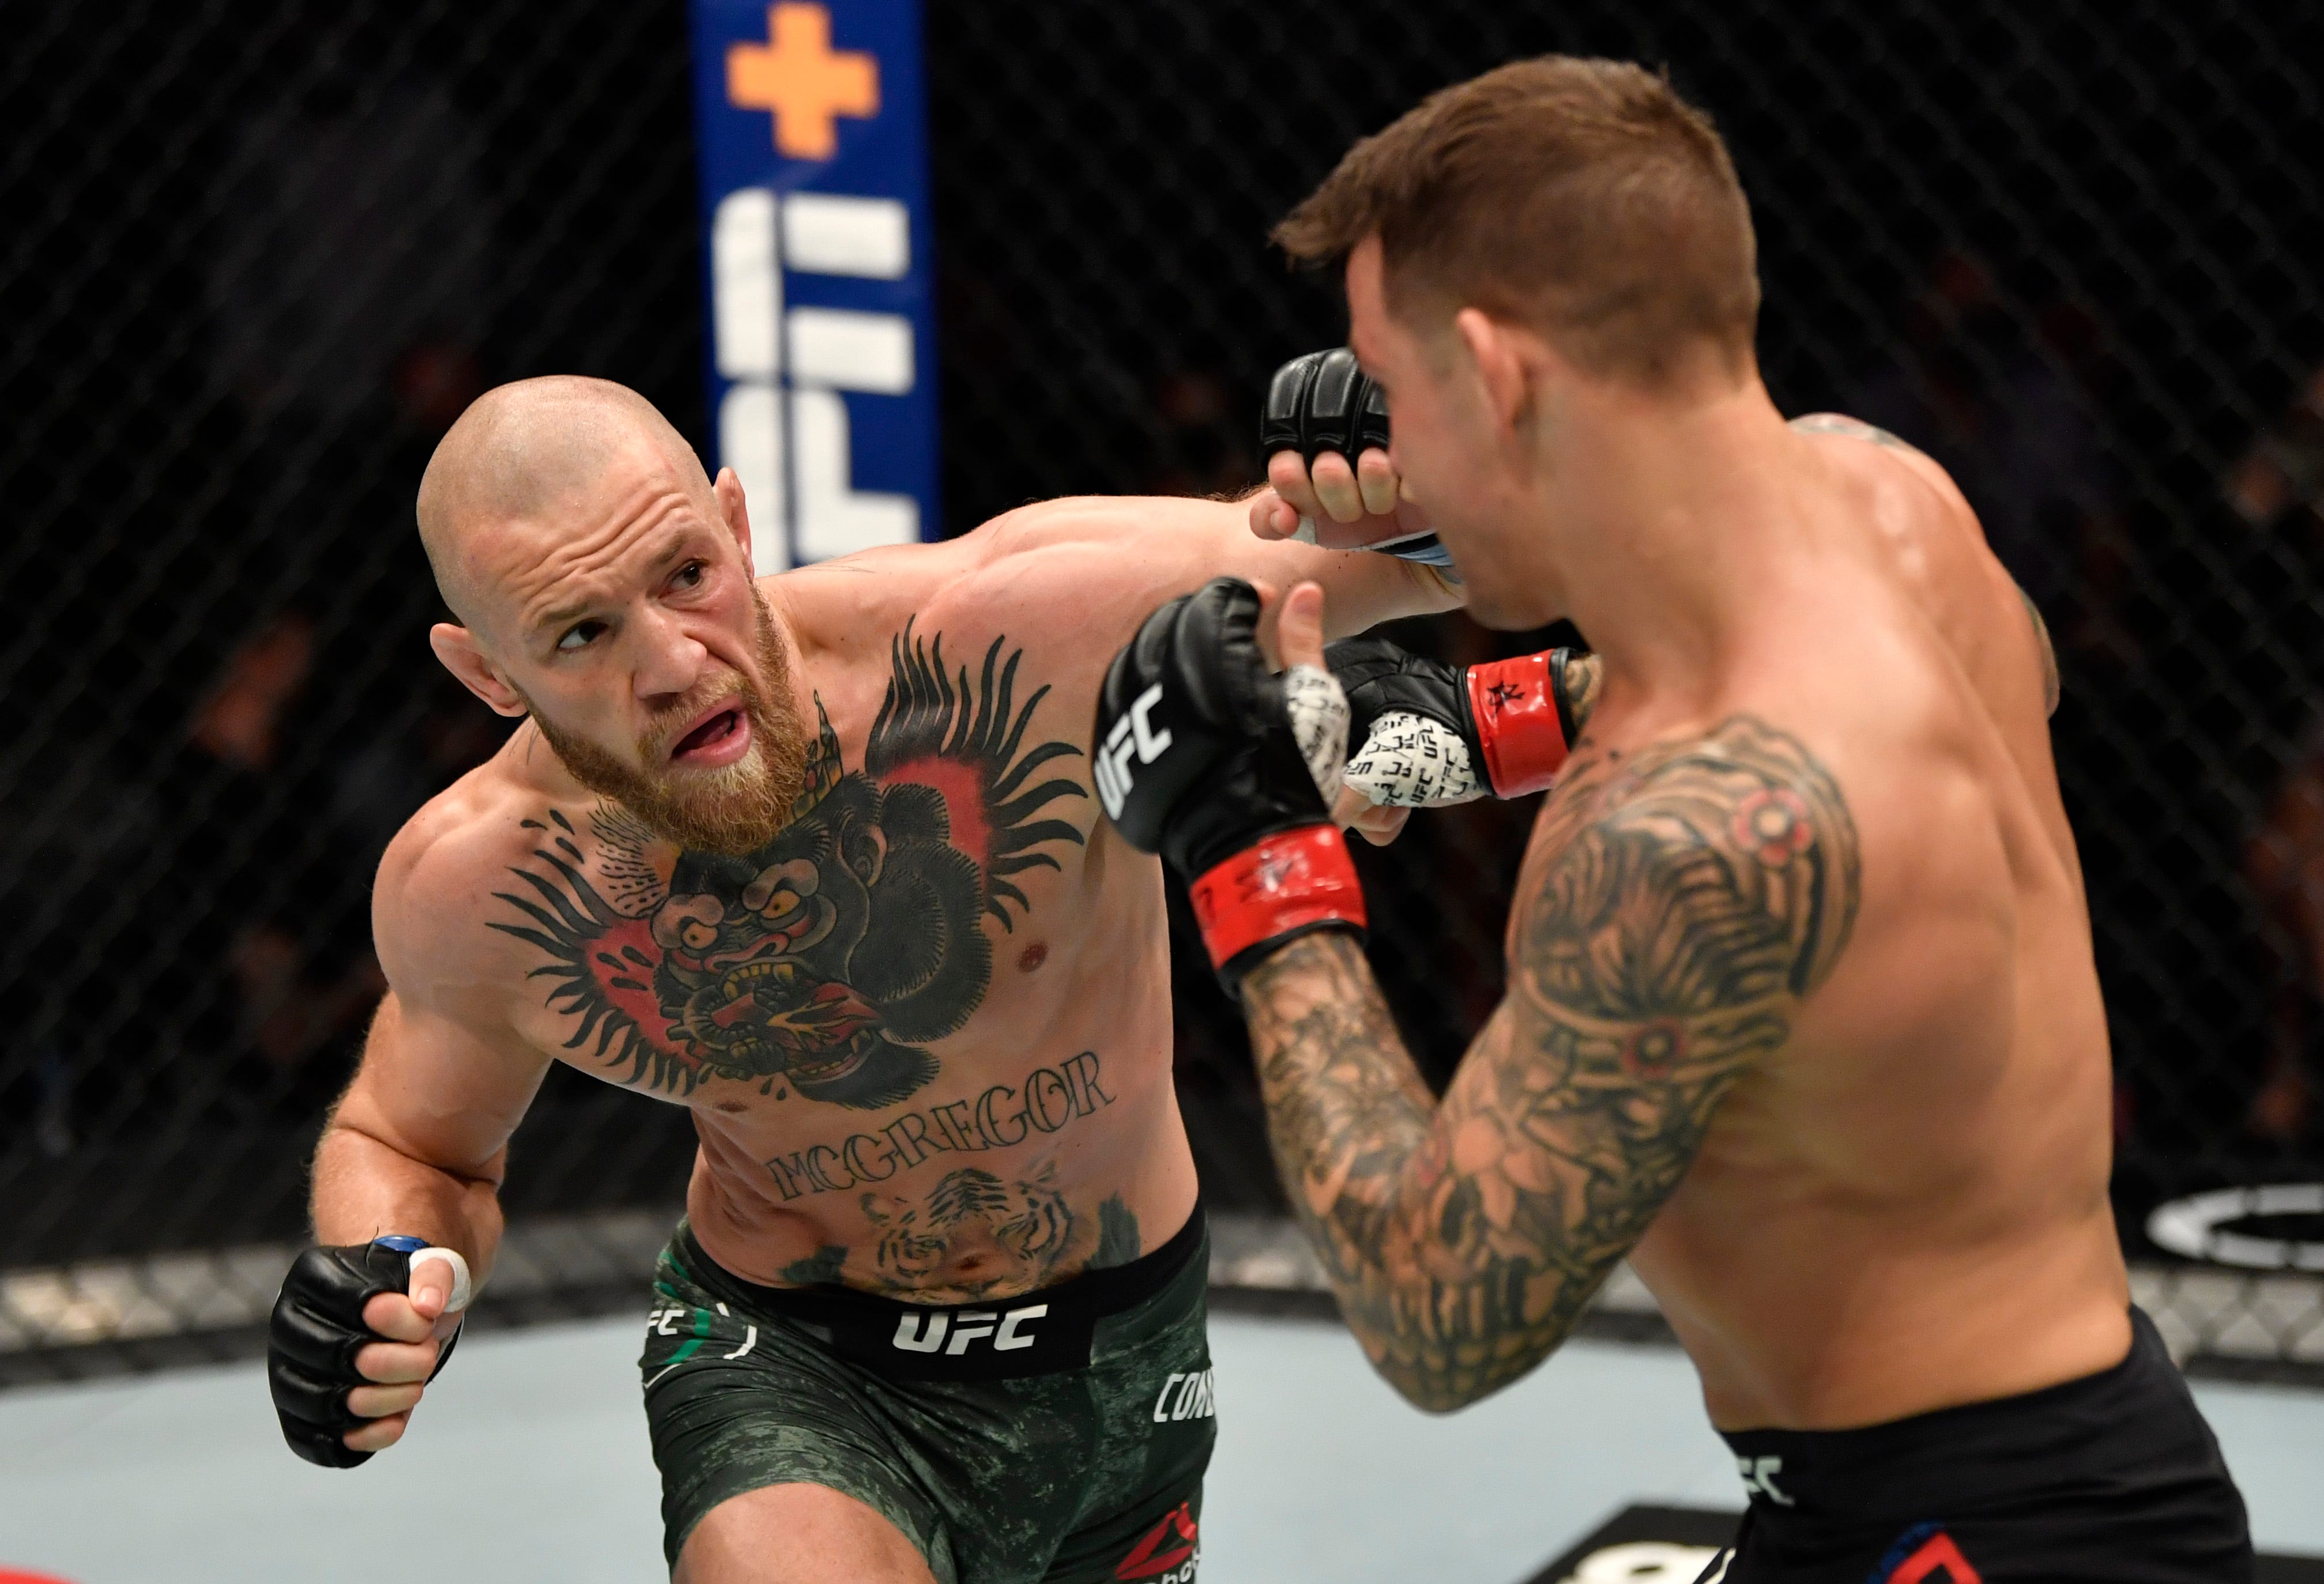 McGregor sorts through emotions of KO loss: 'It's hard to take'